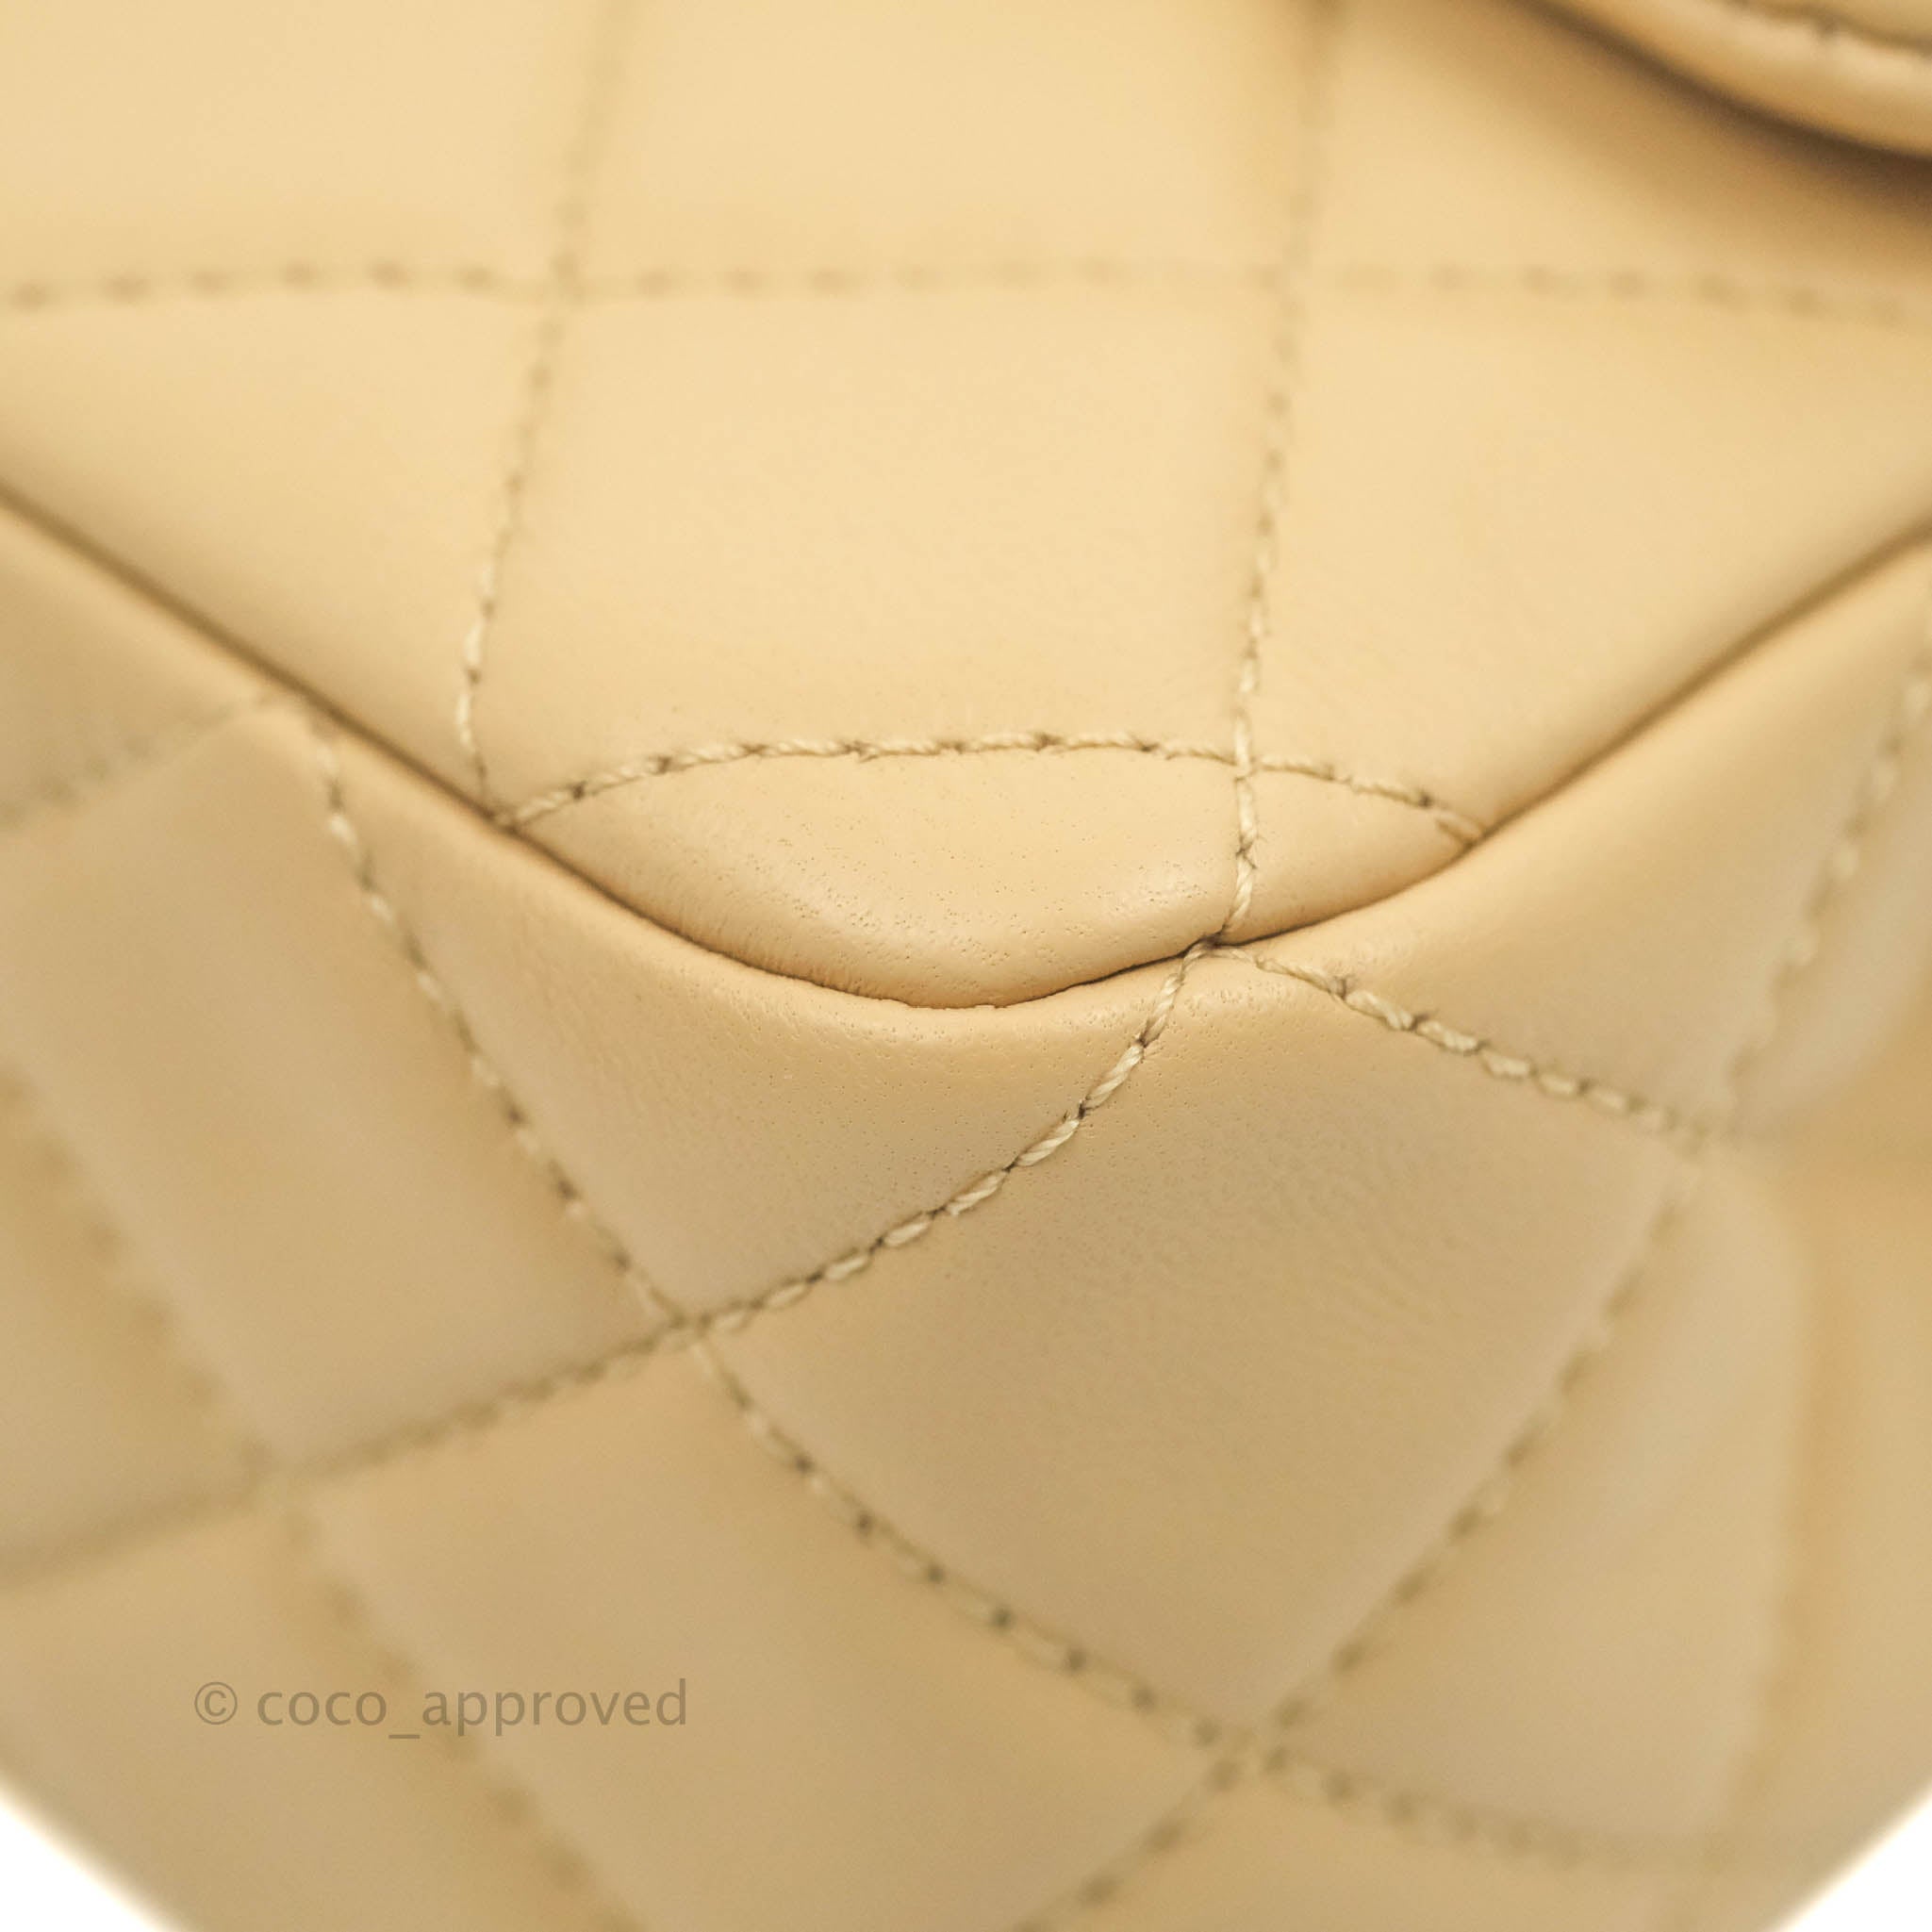 NIB 22C Chanel Pearl Crush Rectangular Mini Flap Bag Pink Beige